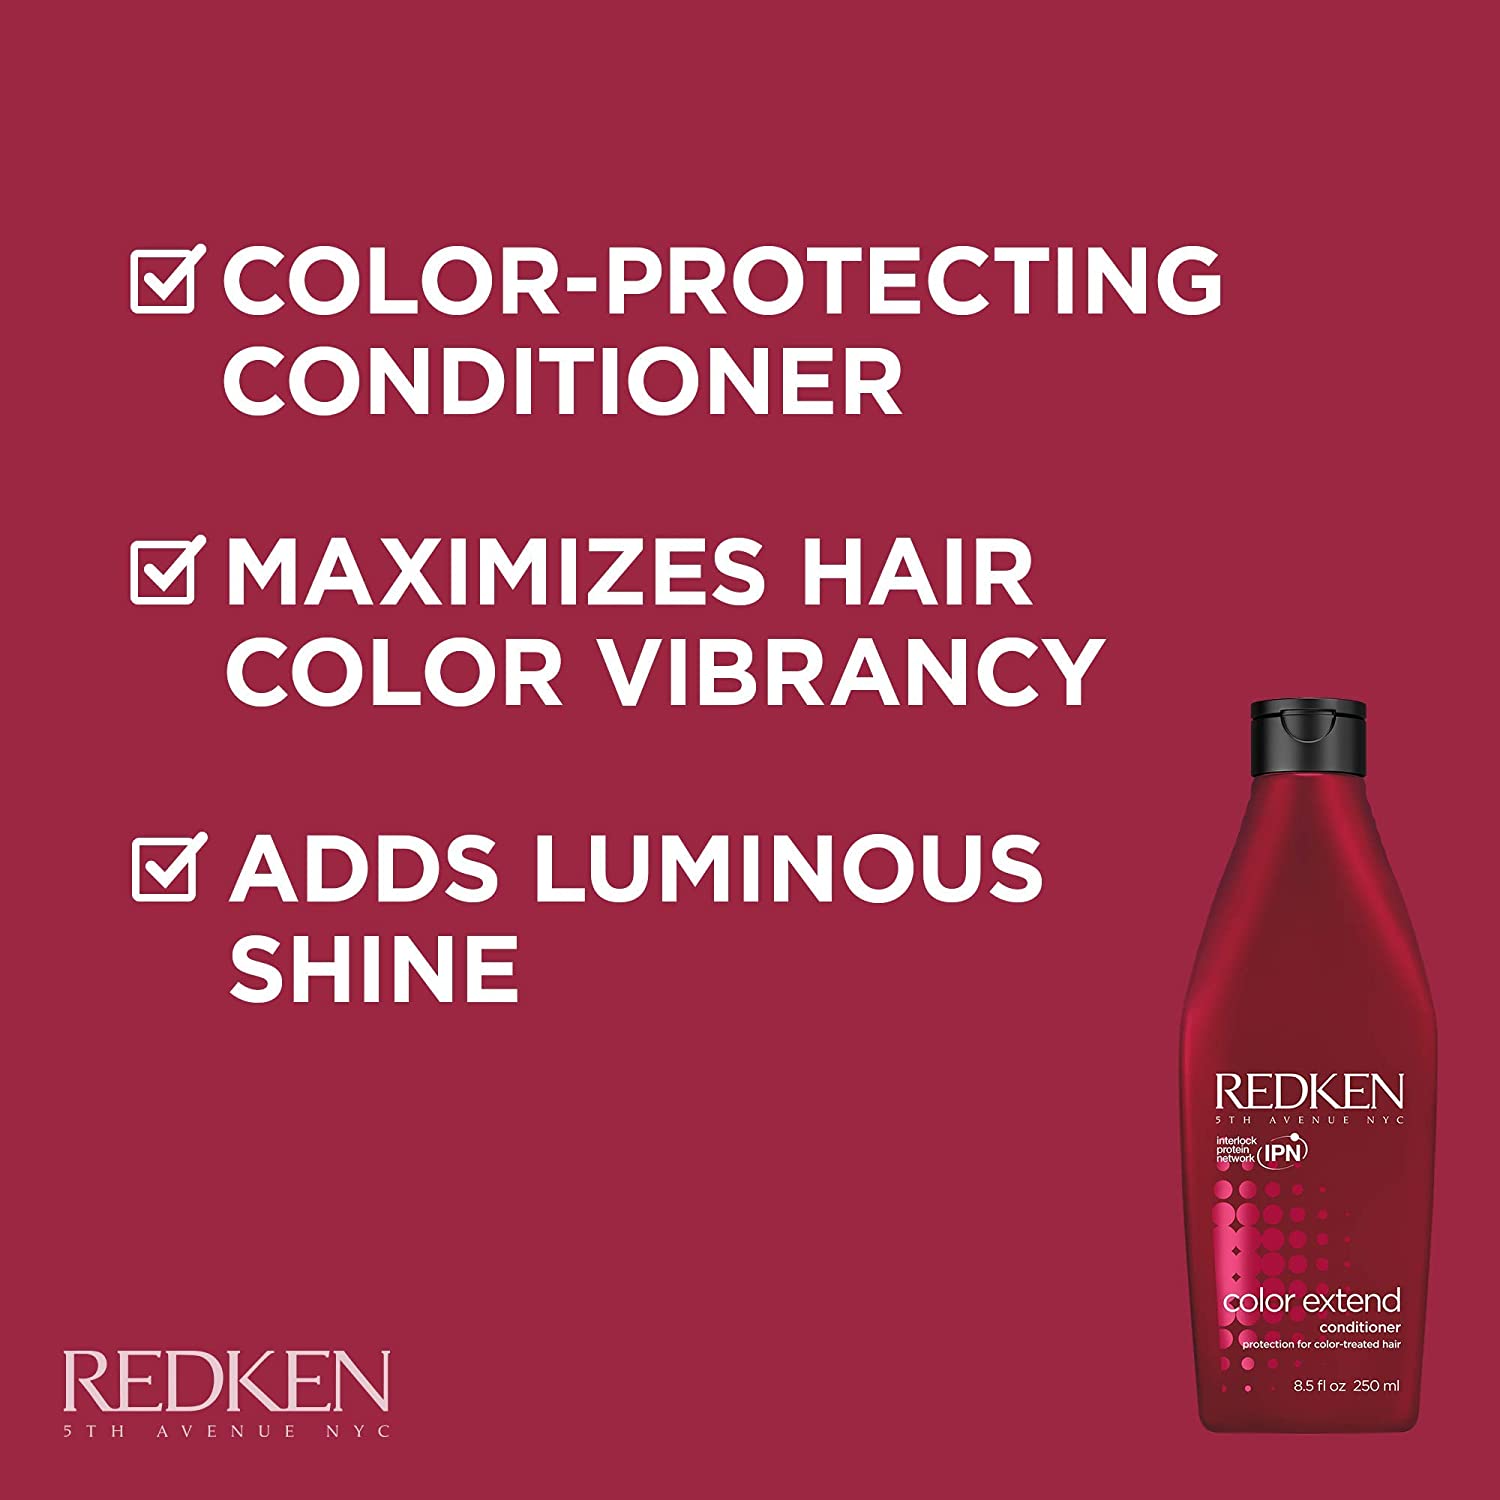 Redken - Color Extend - Shampoo - by Redken |ProCare Outlet|